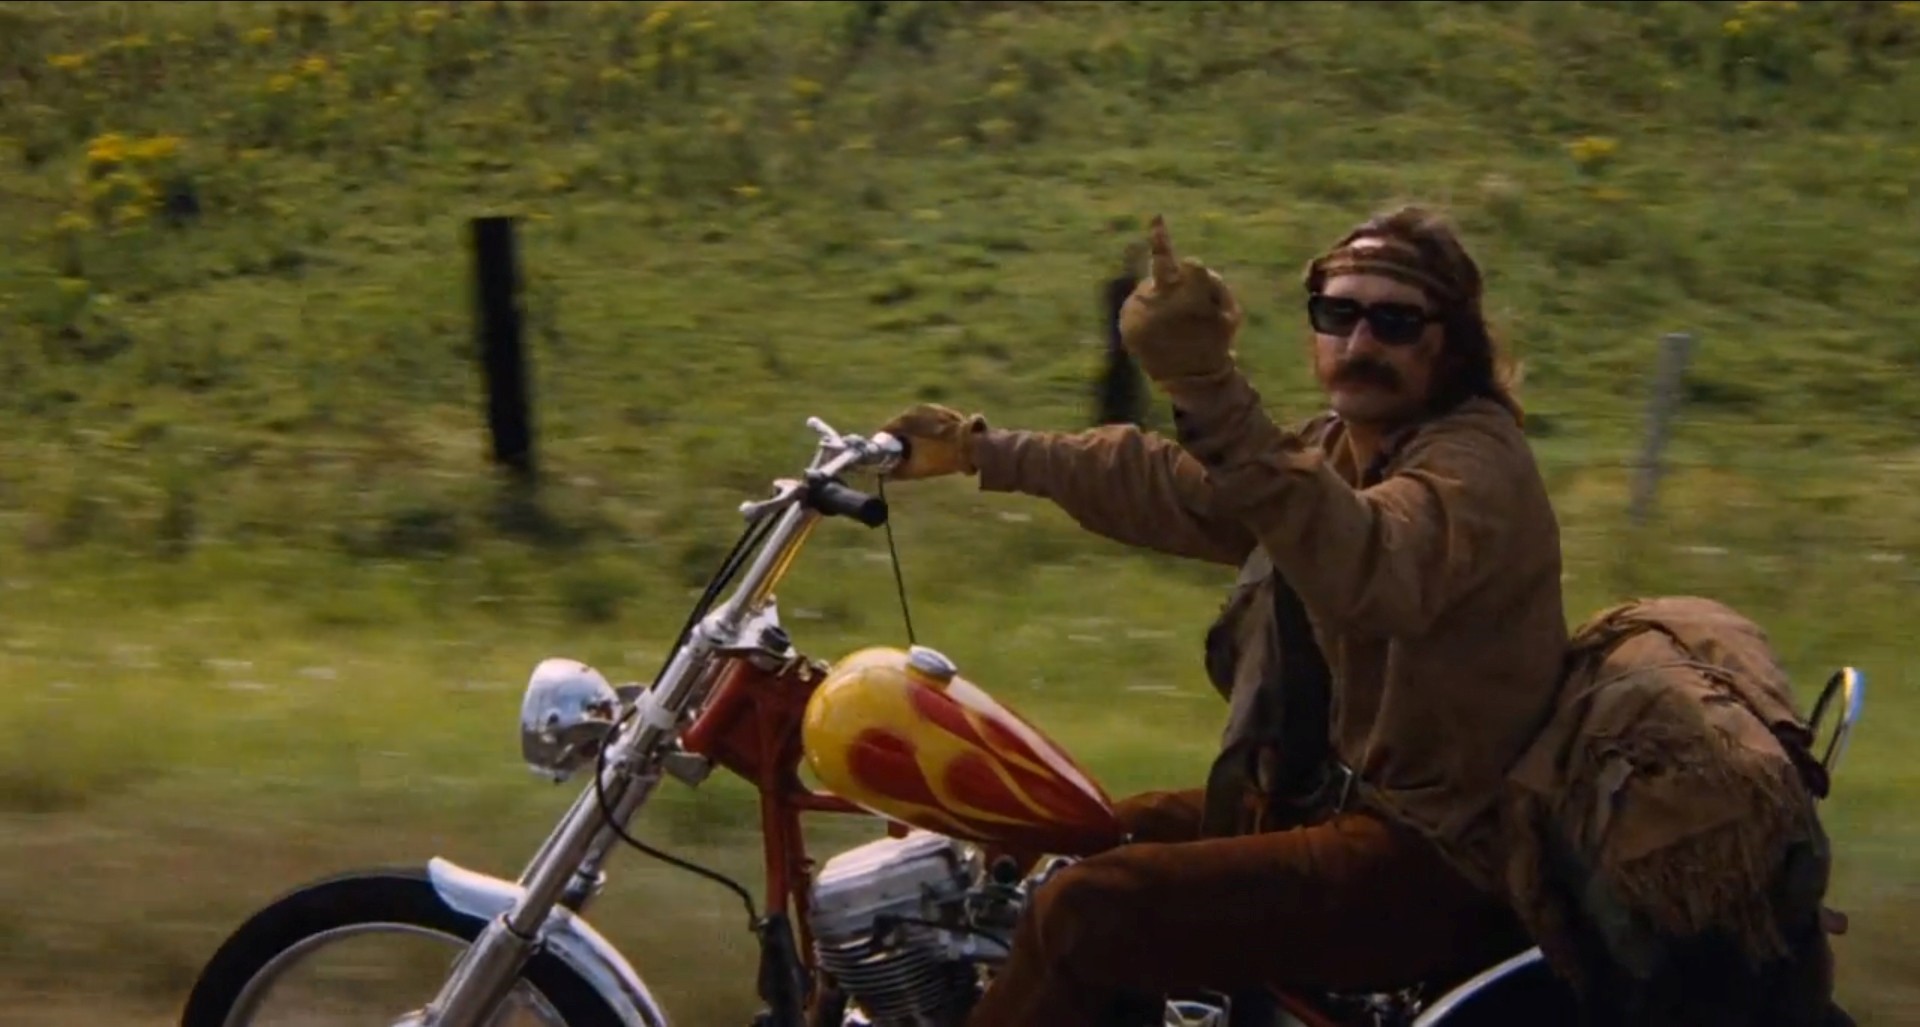 easy rider movie motorcycle